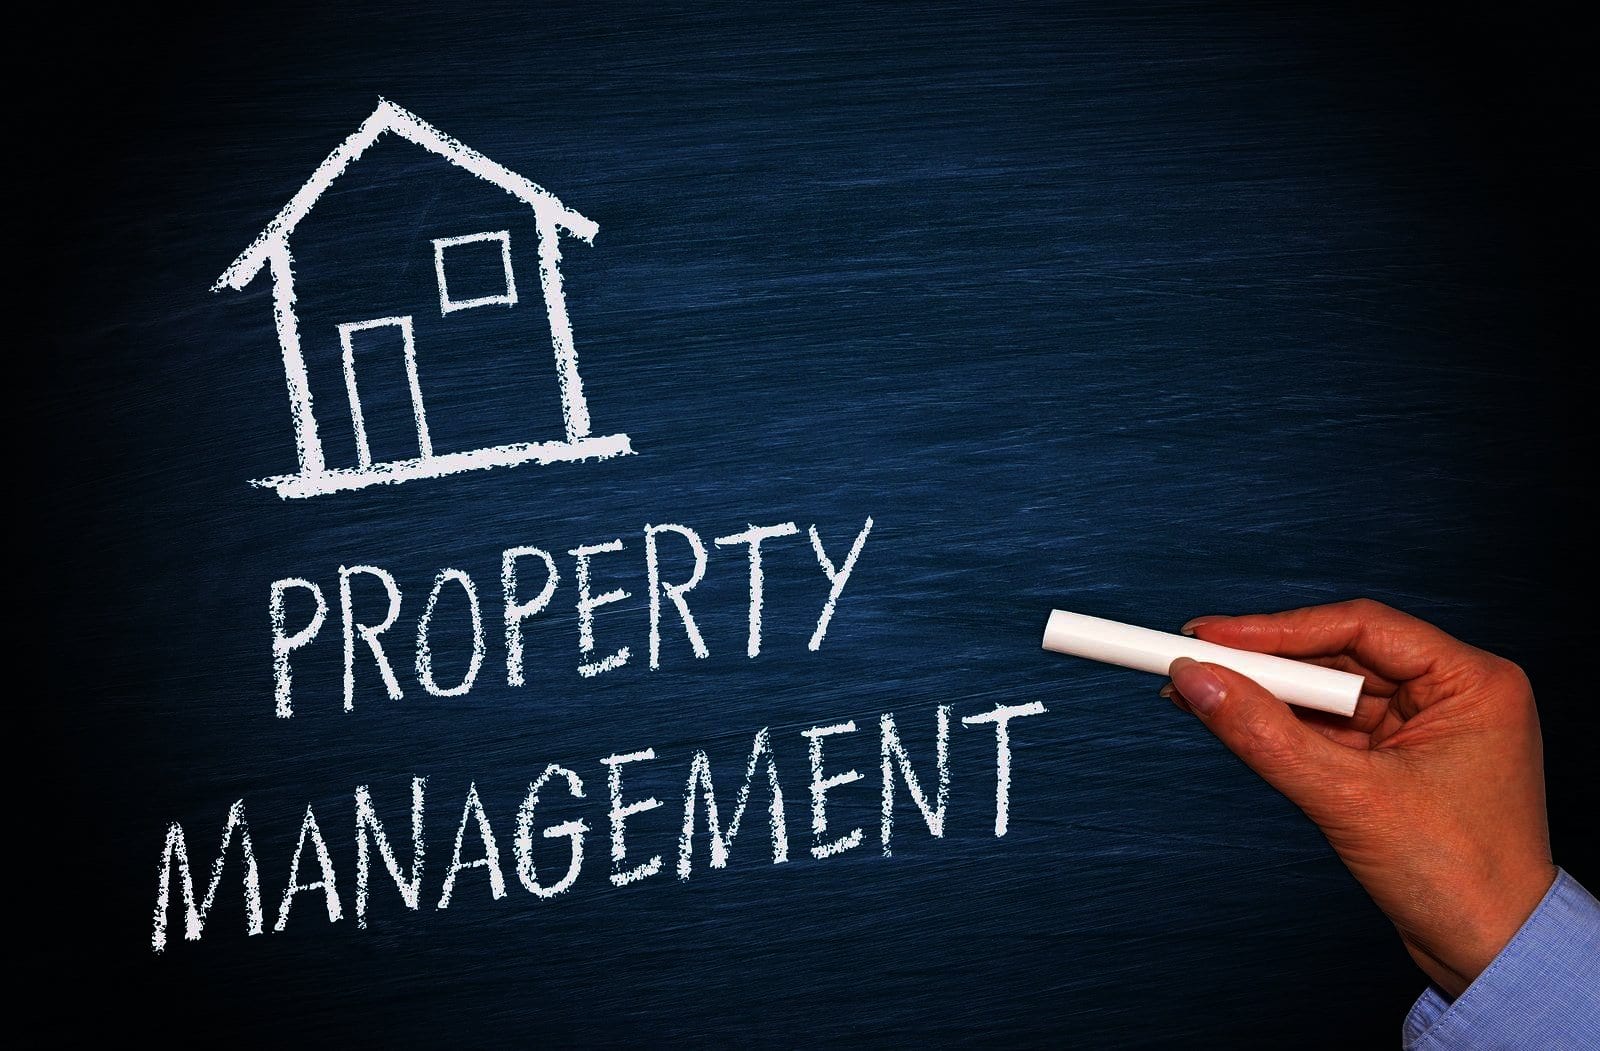 Healdsburg Property Management